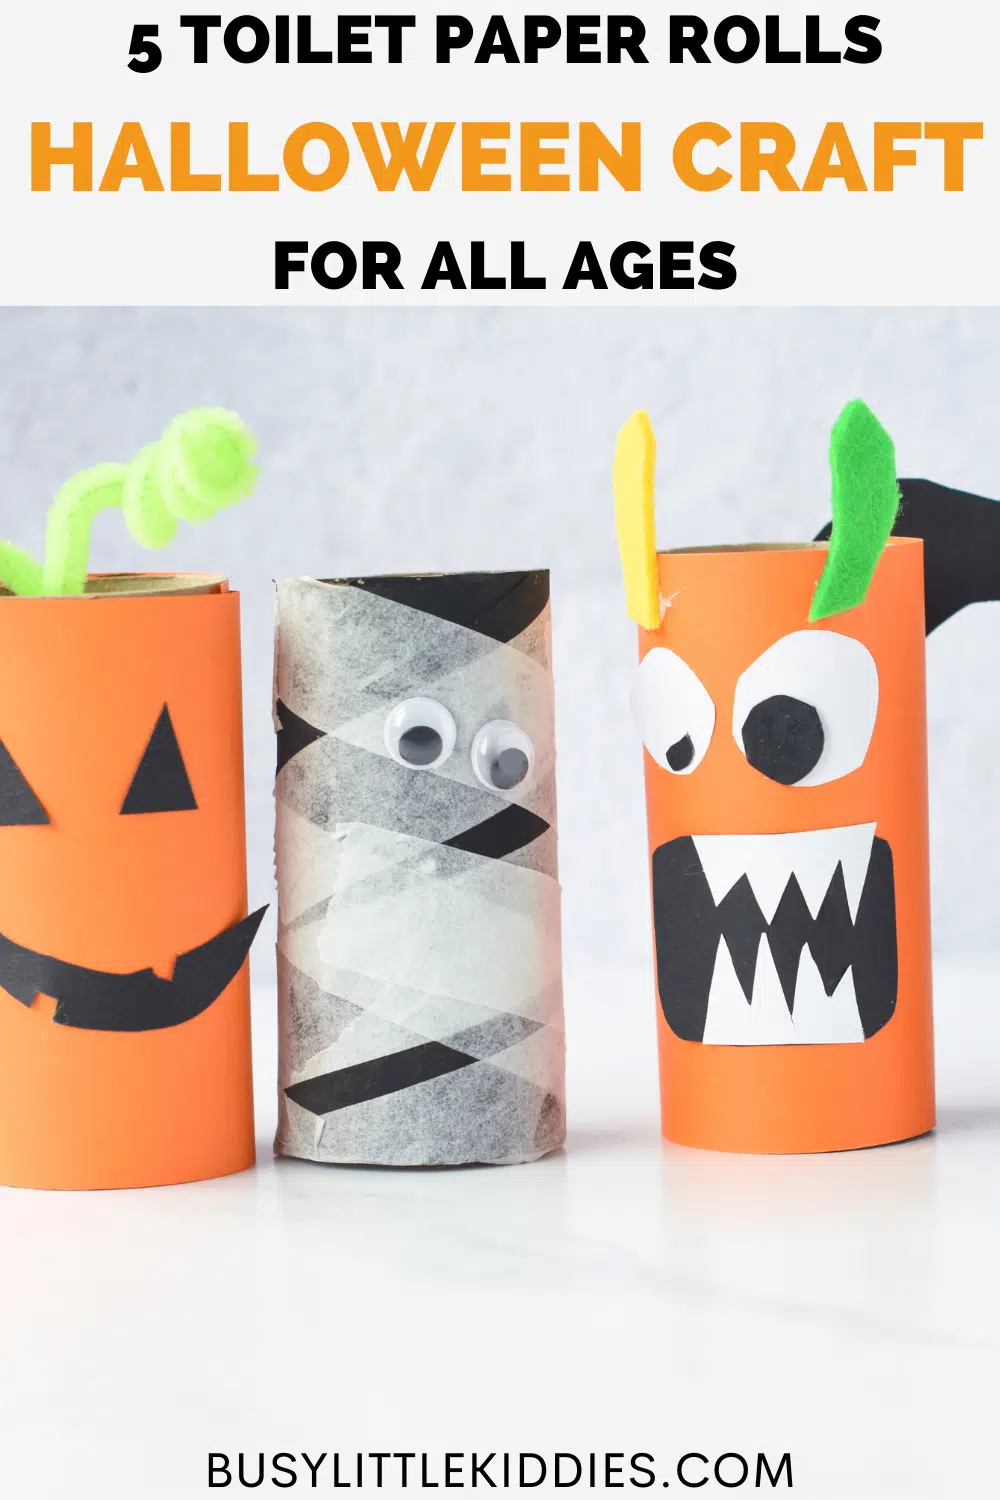 5 Toilet Paper Roll Halloween Craft Ideas - Busy Little Kiddies